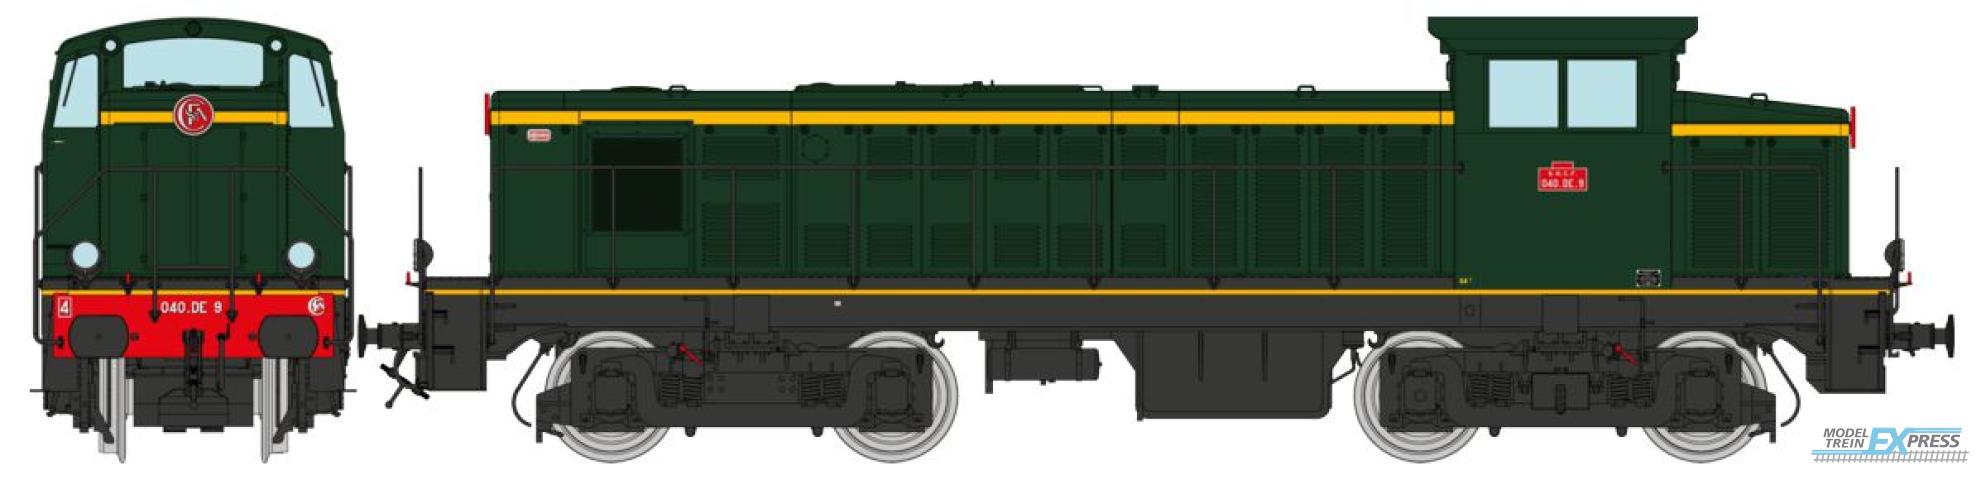 REE models JM-013SAC Diesel Locomotive 040 DE 09 origin, with rail grafts, région South West, Era III - AC SOUND 3 Rails AC